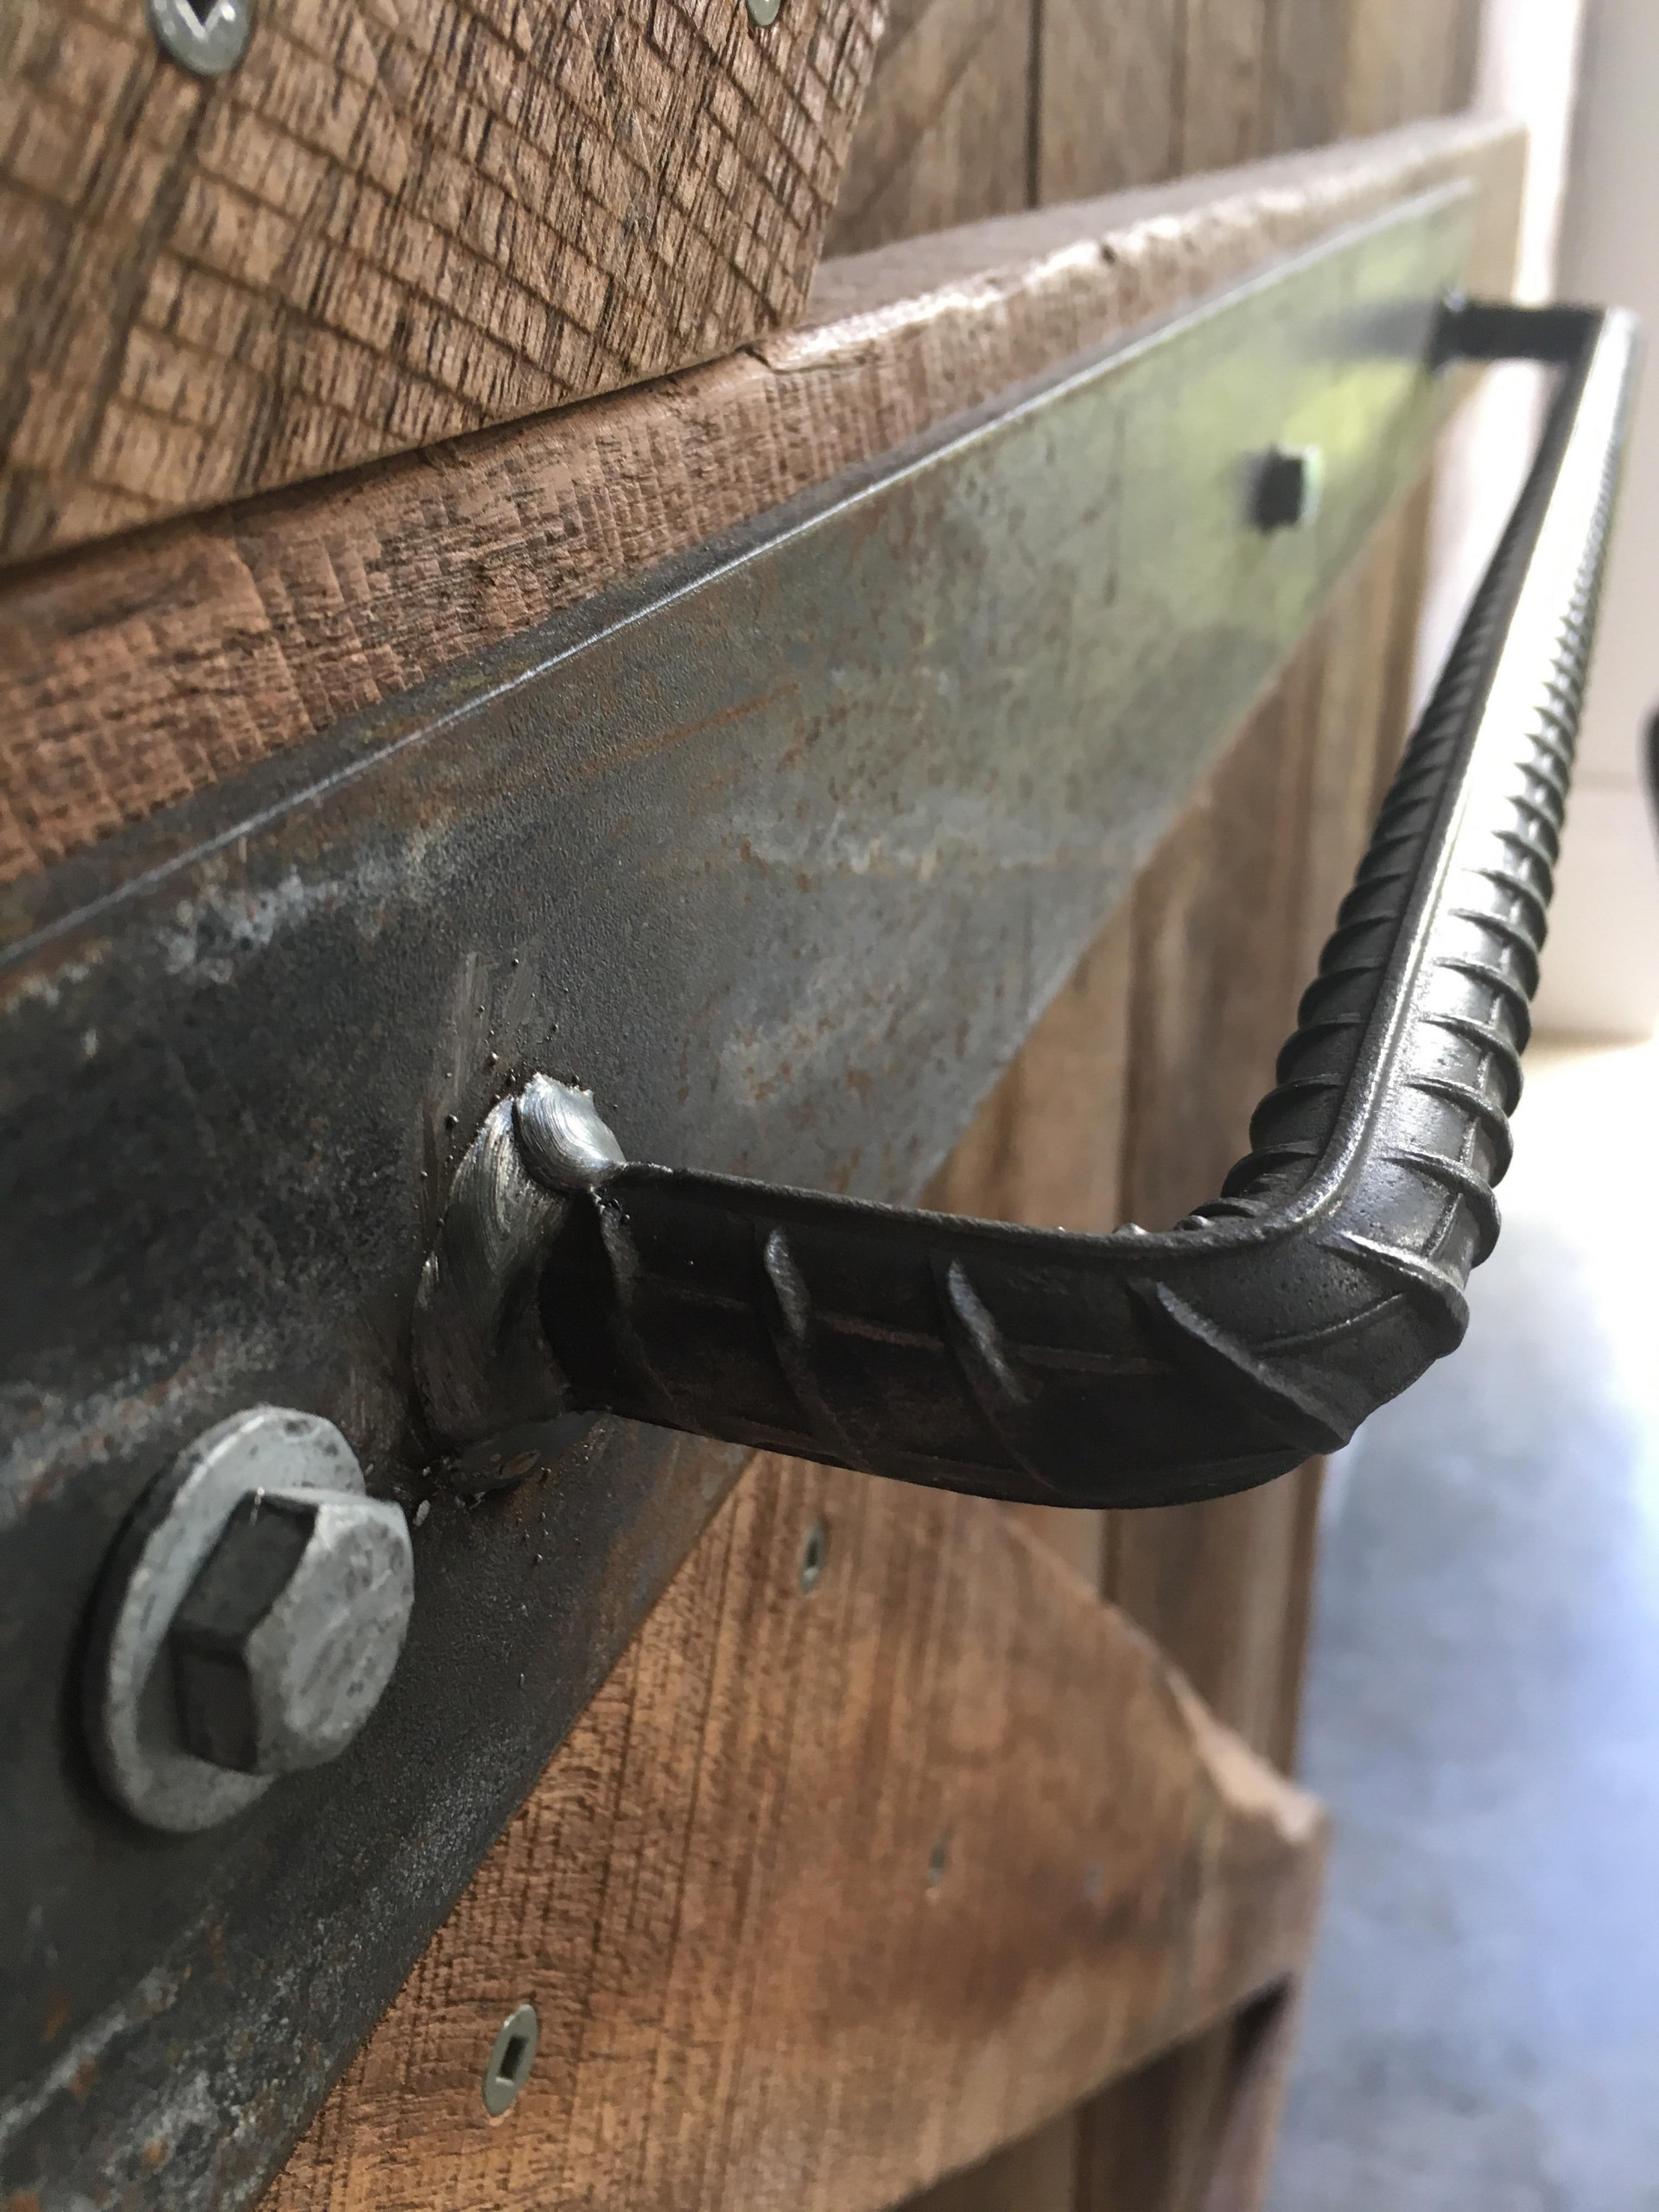 Rio Bar bent and welded to make a unique barn door handle